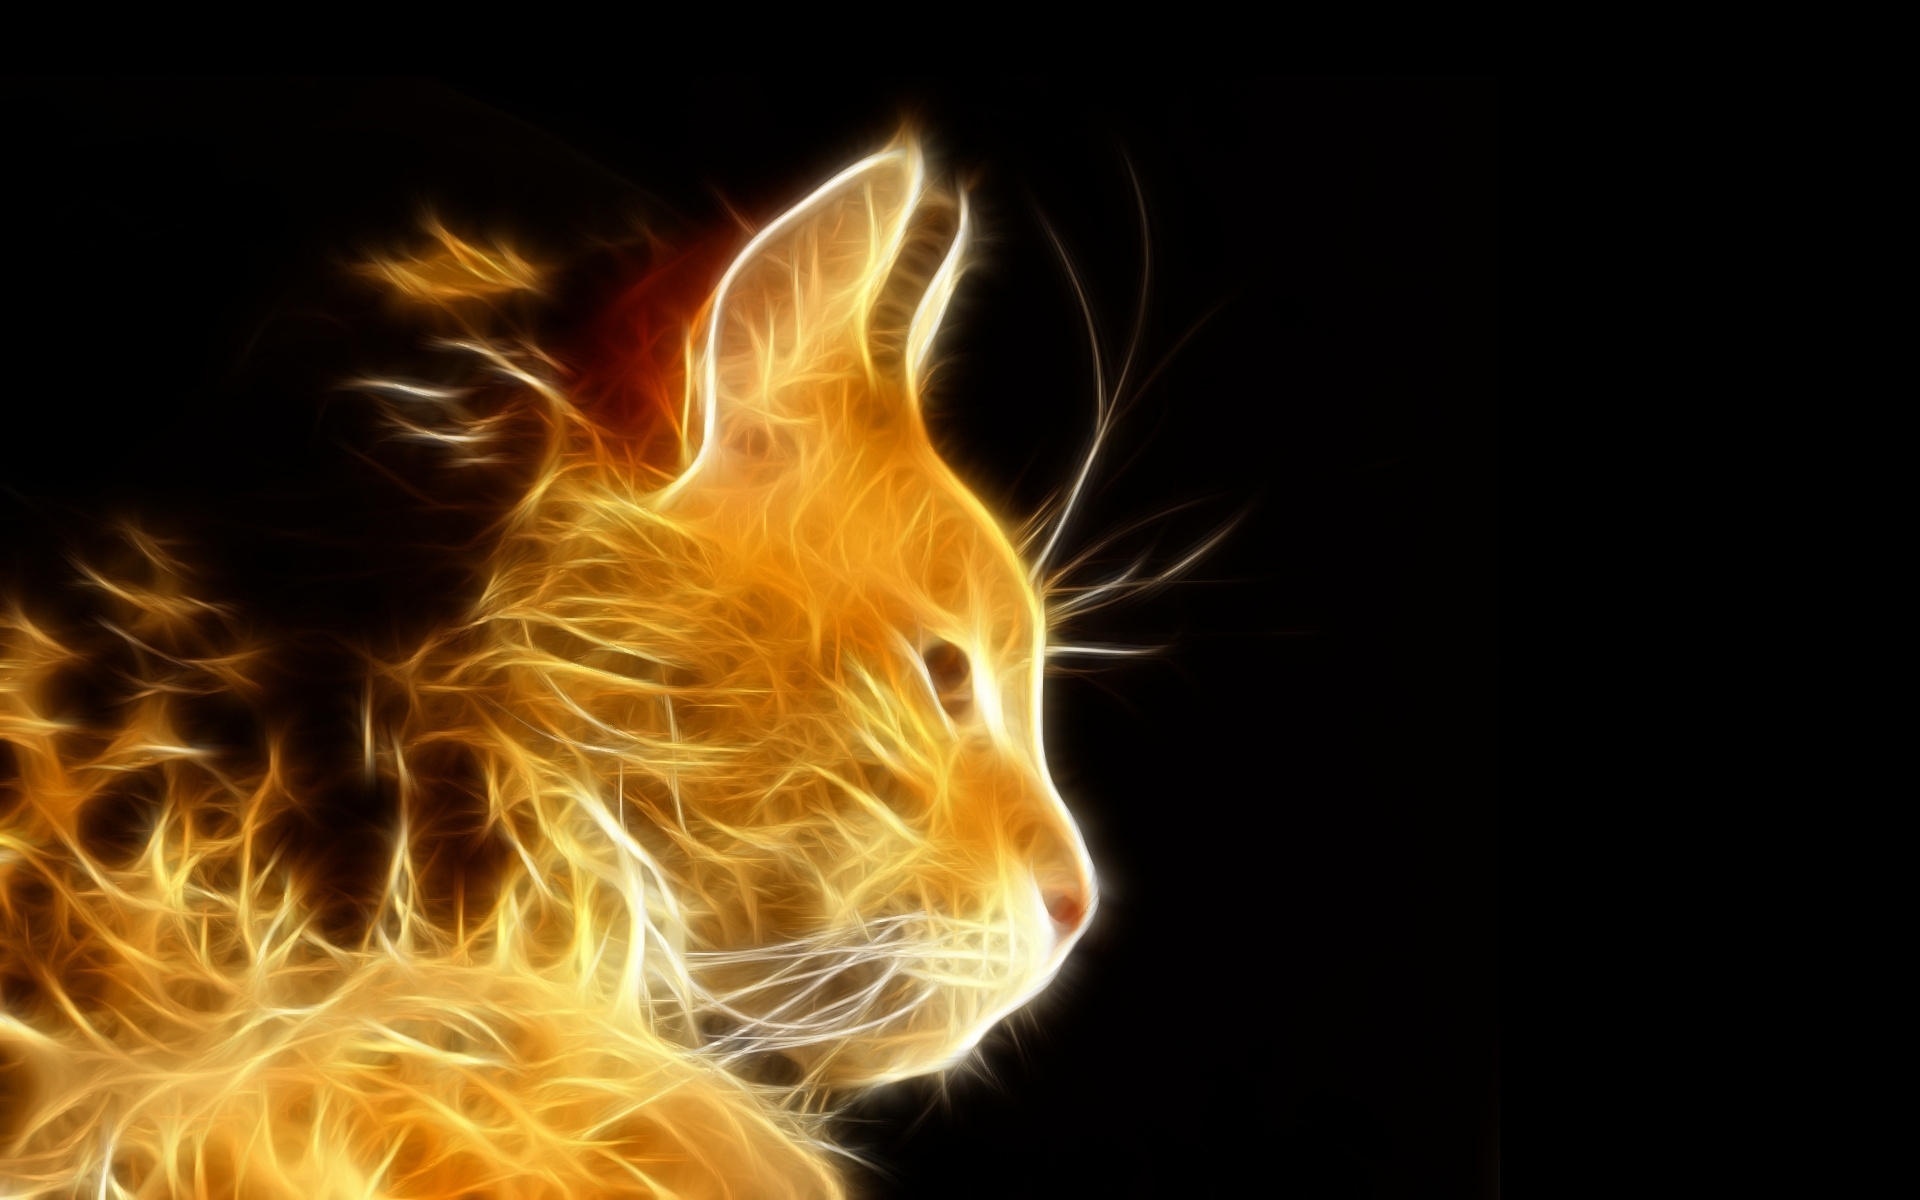 Wallpapers wallpaper cat photoshop flames on the desktop